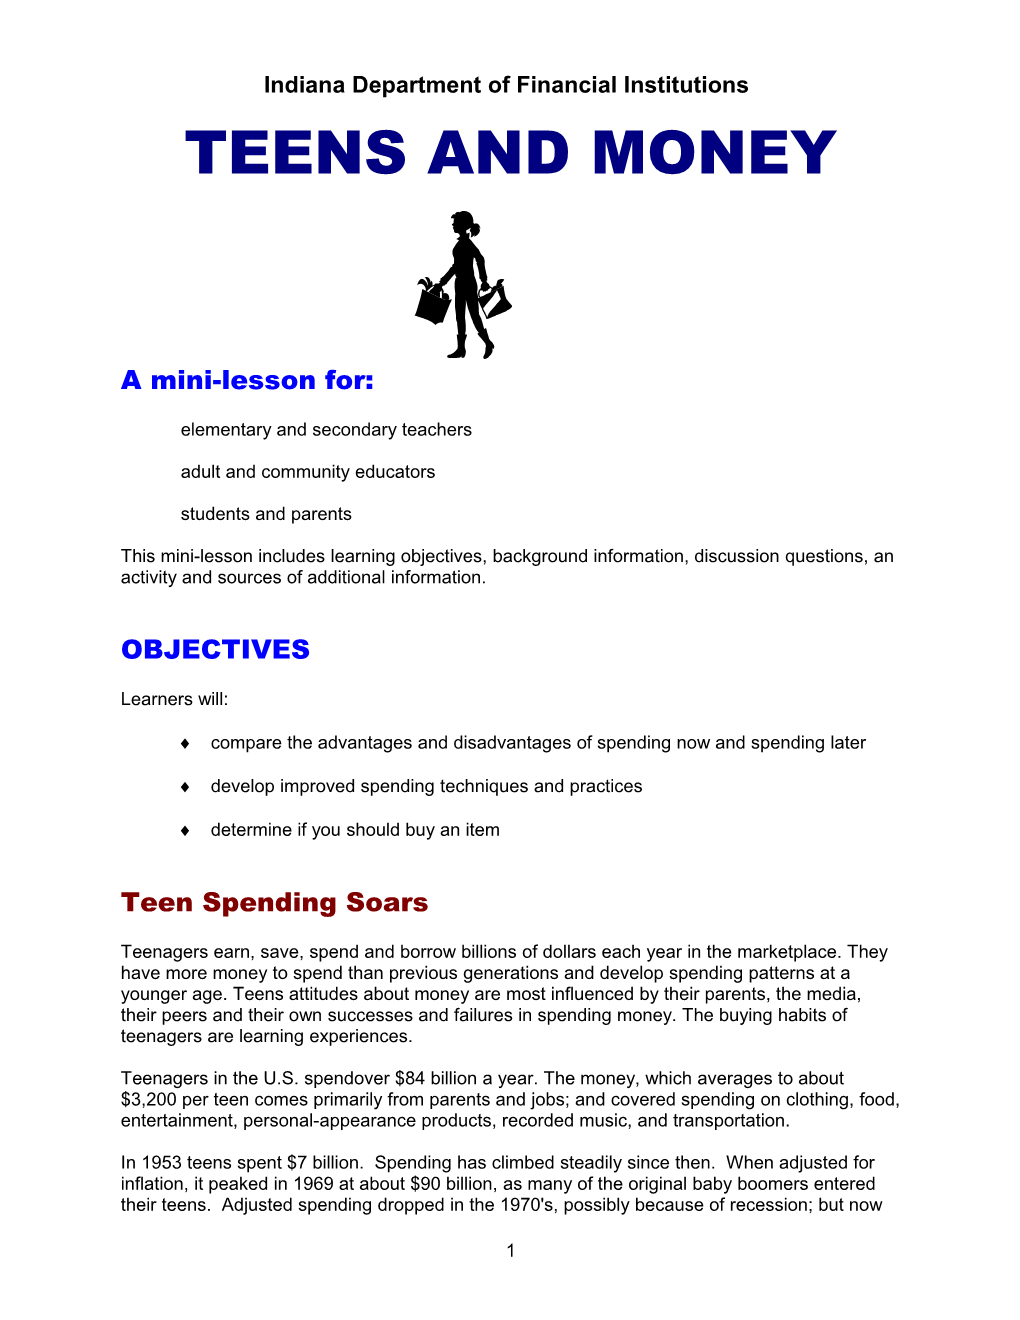 Children and Money